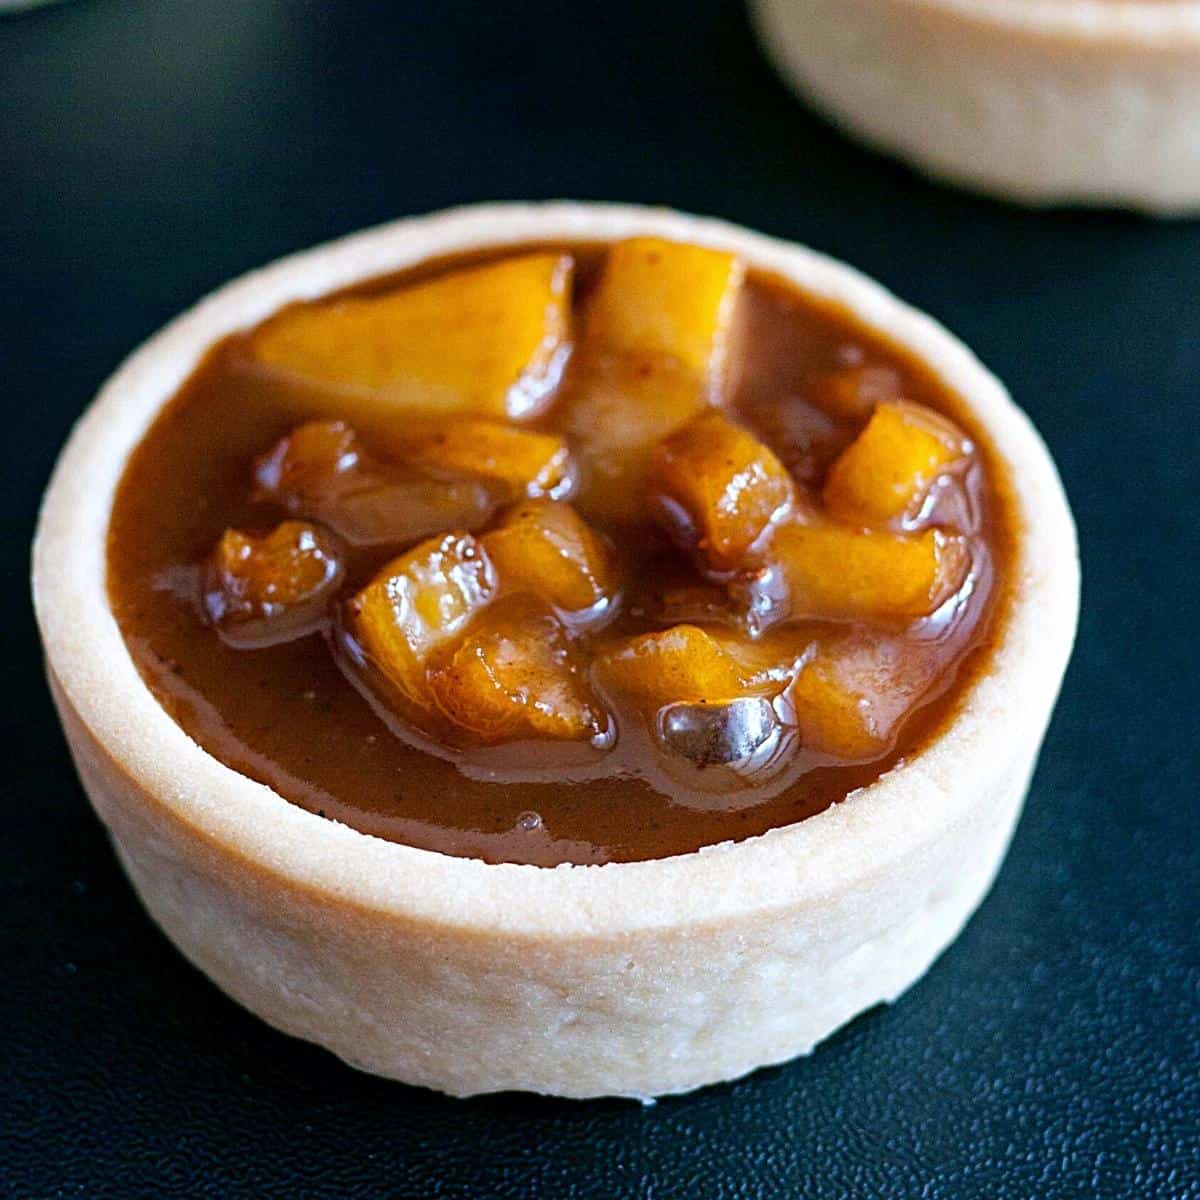 Mini tart shell filled with caramel apple filling.